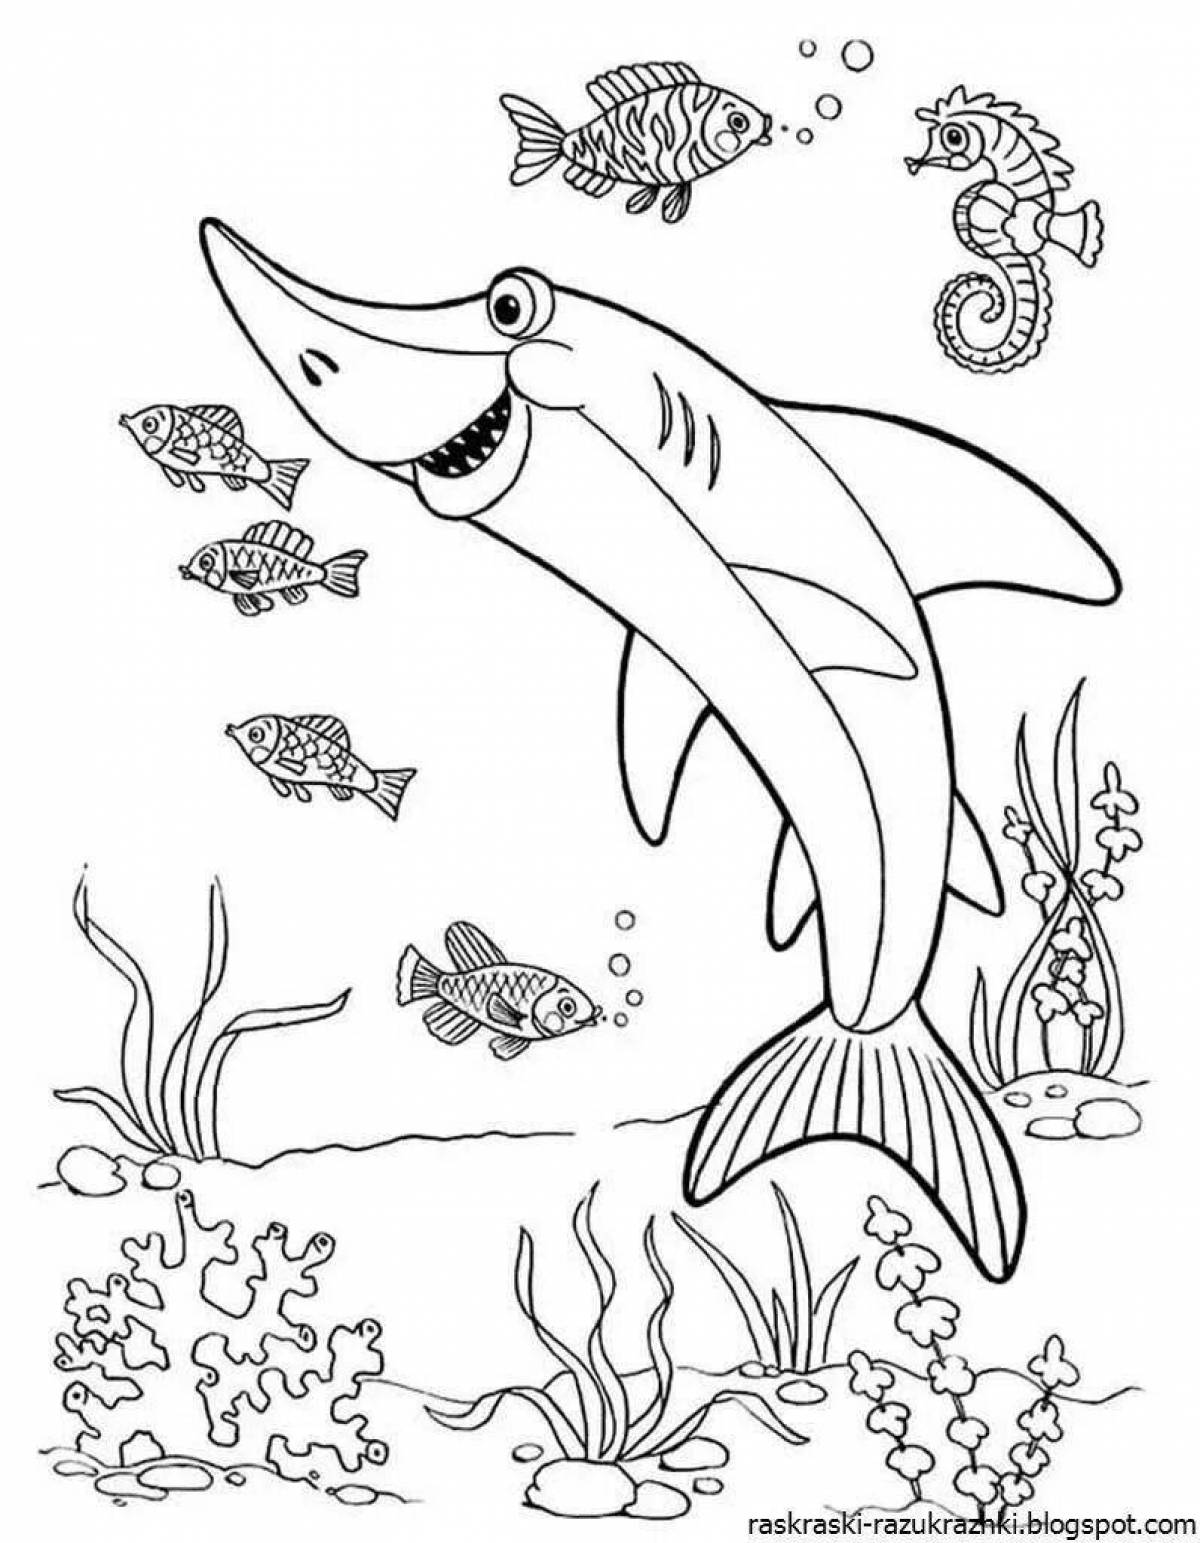 Playful aquatic coloring page